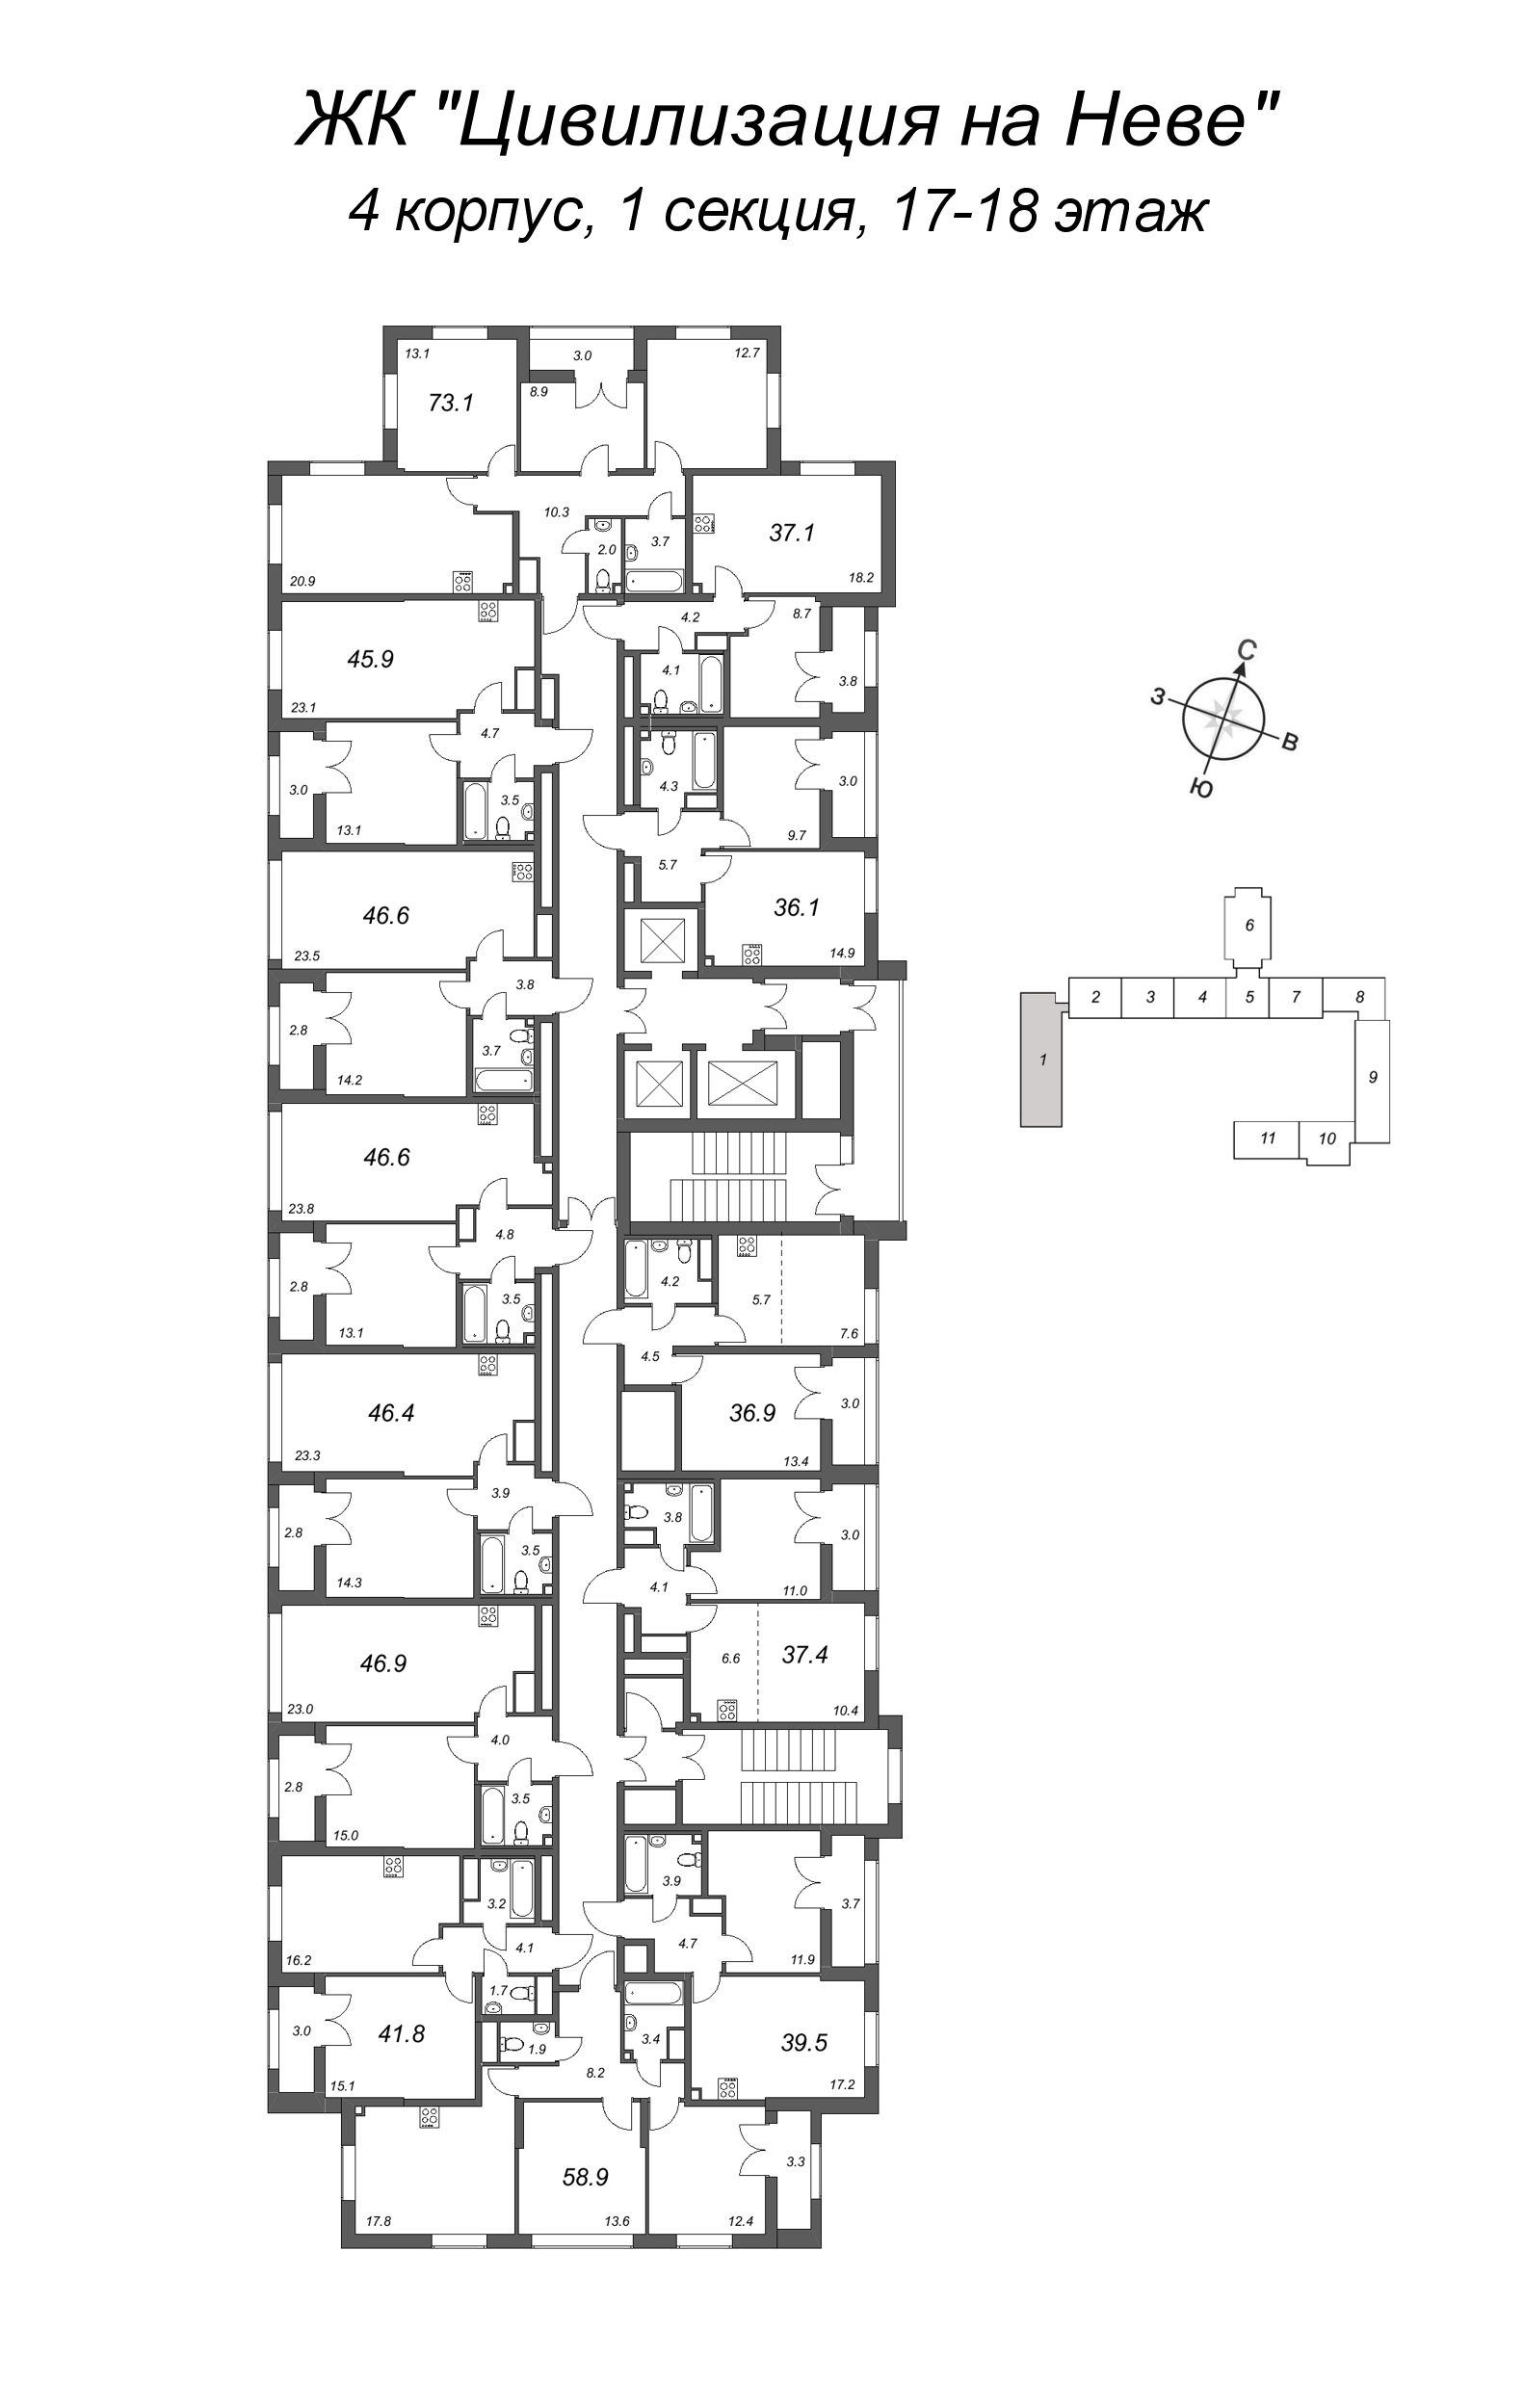 3-комнатная (Евро) квартира, 58.9 м² - планировка этажа